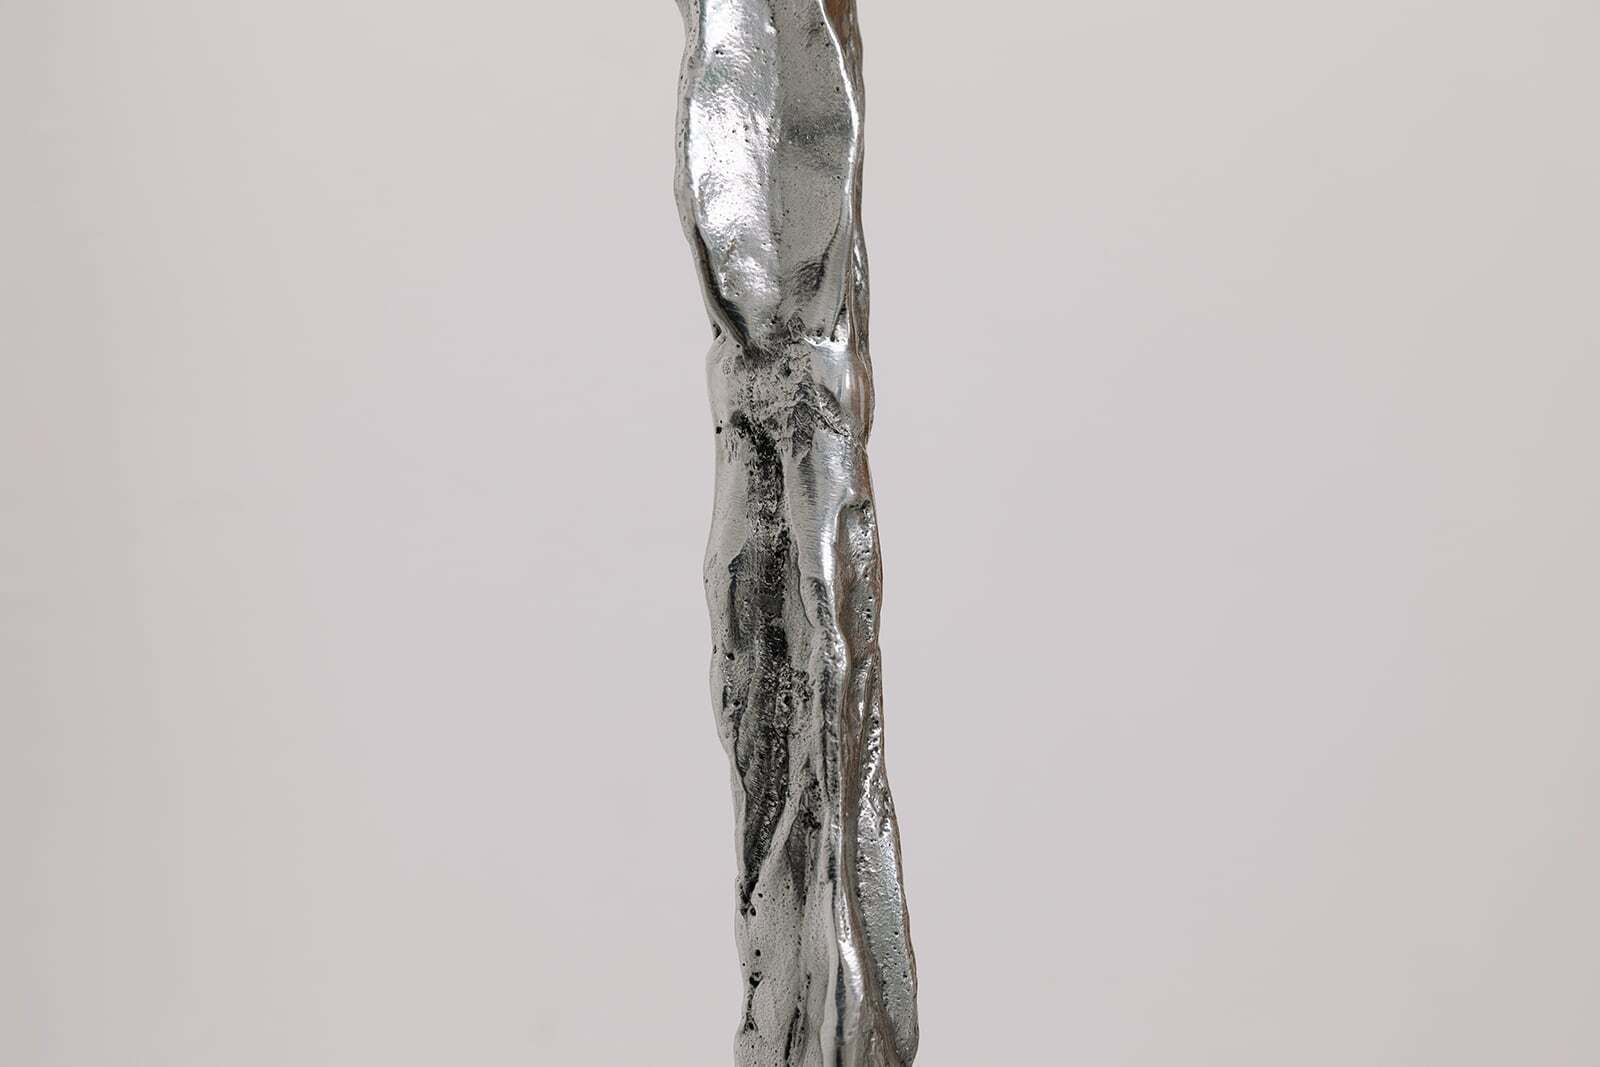 Dishon Yuldash, * Посох &l* (detail), 2021, porcelain, aluminum casting, 170 x 20 x 3 cm